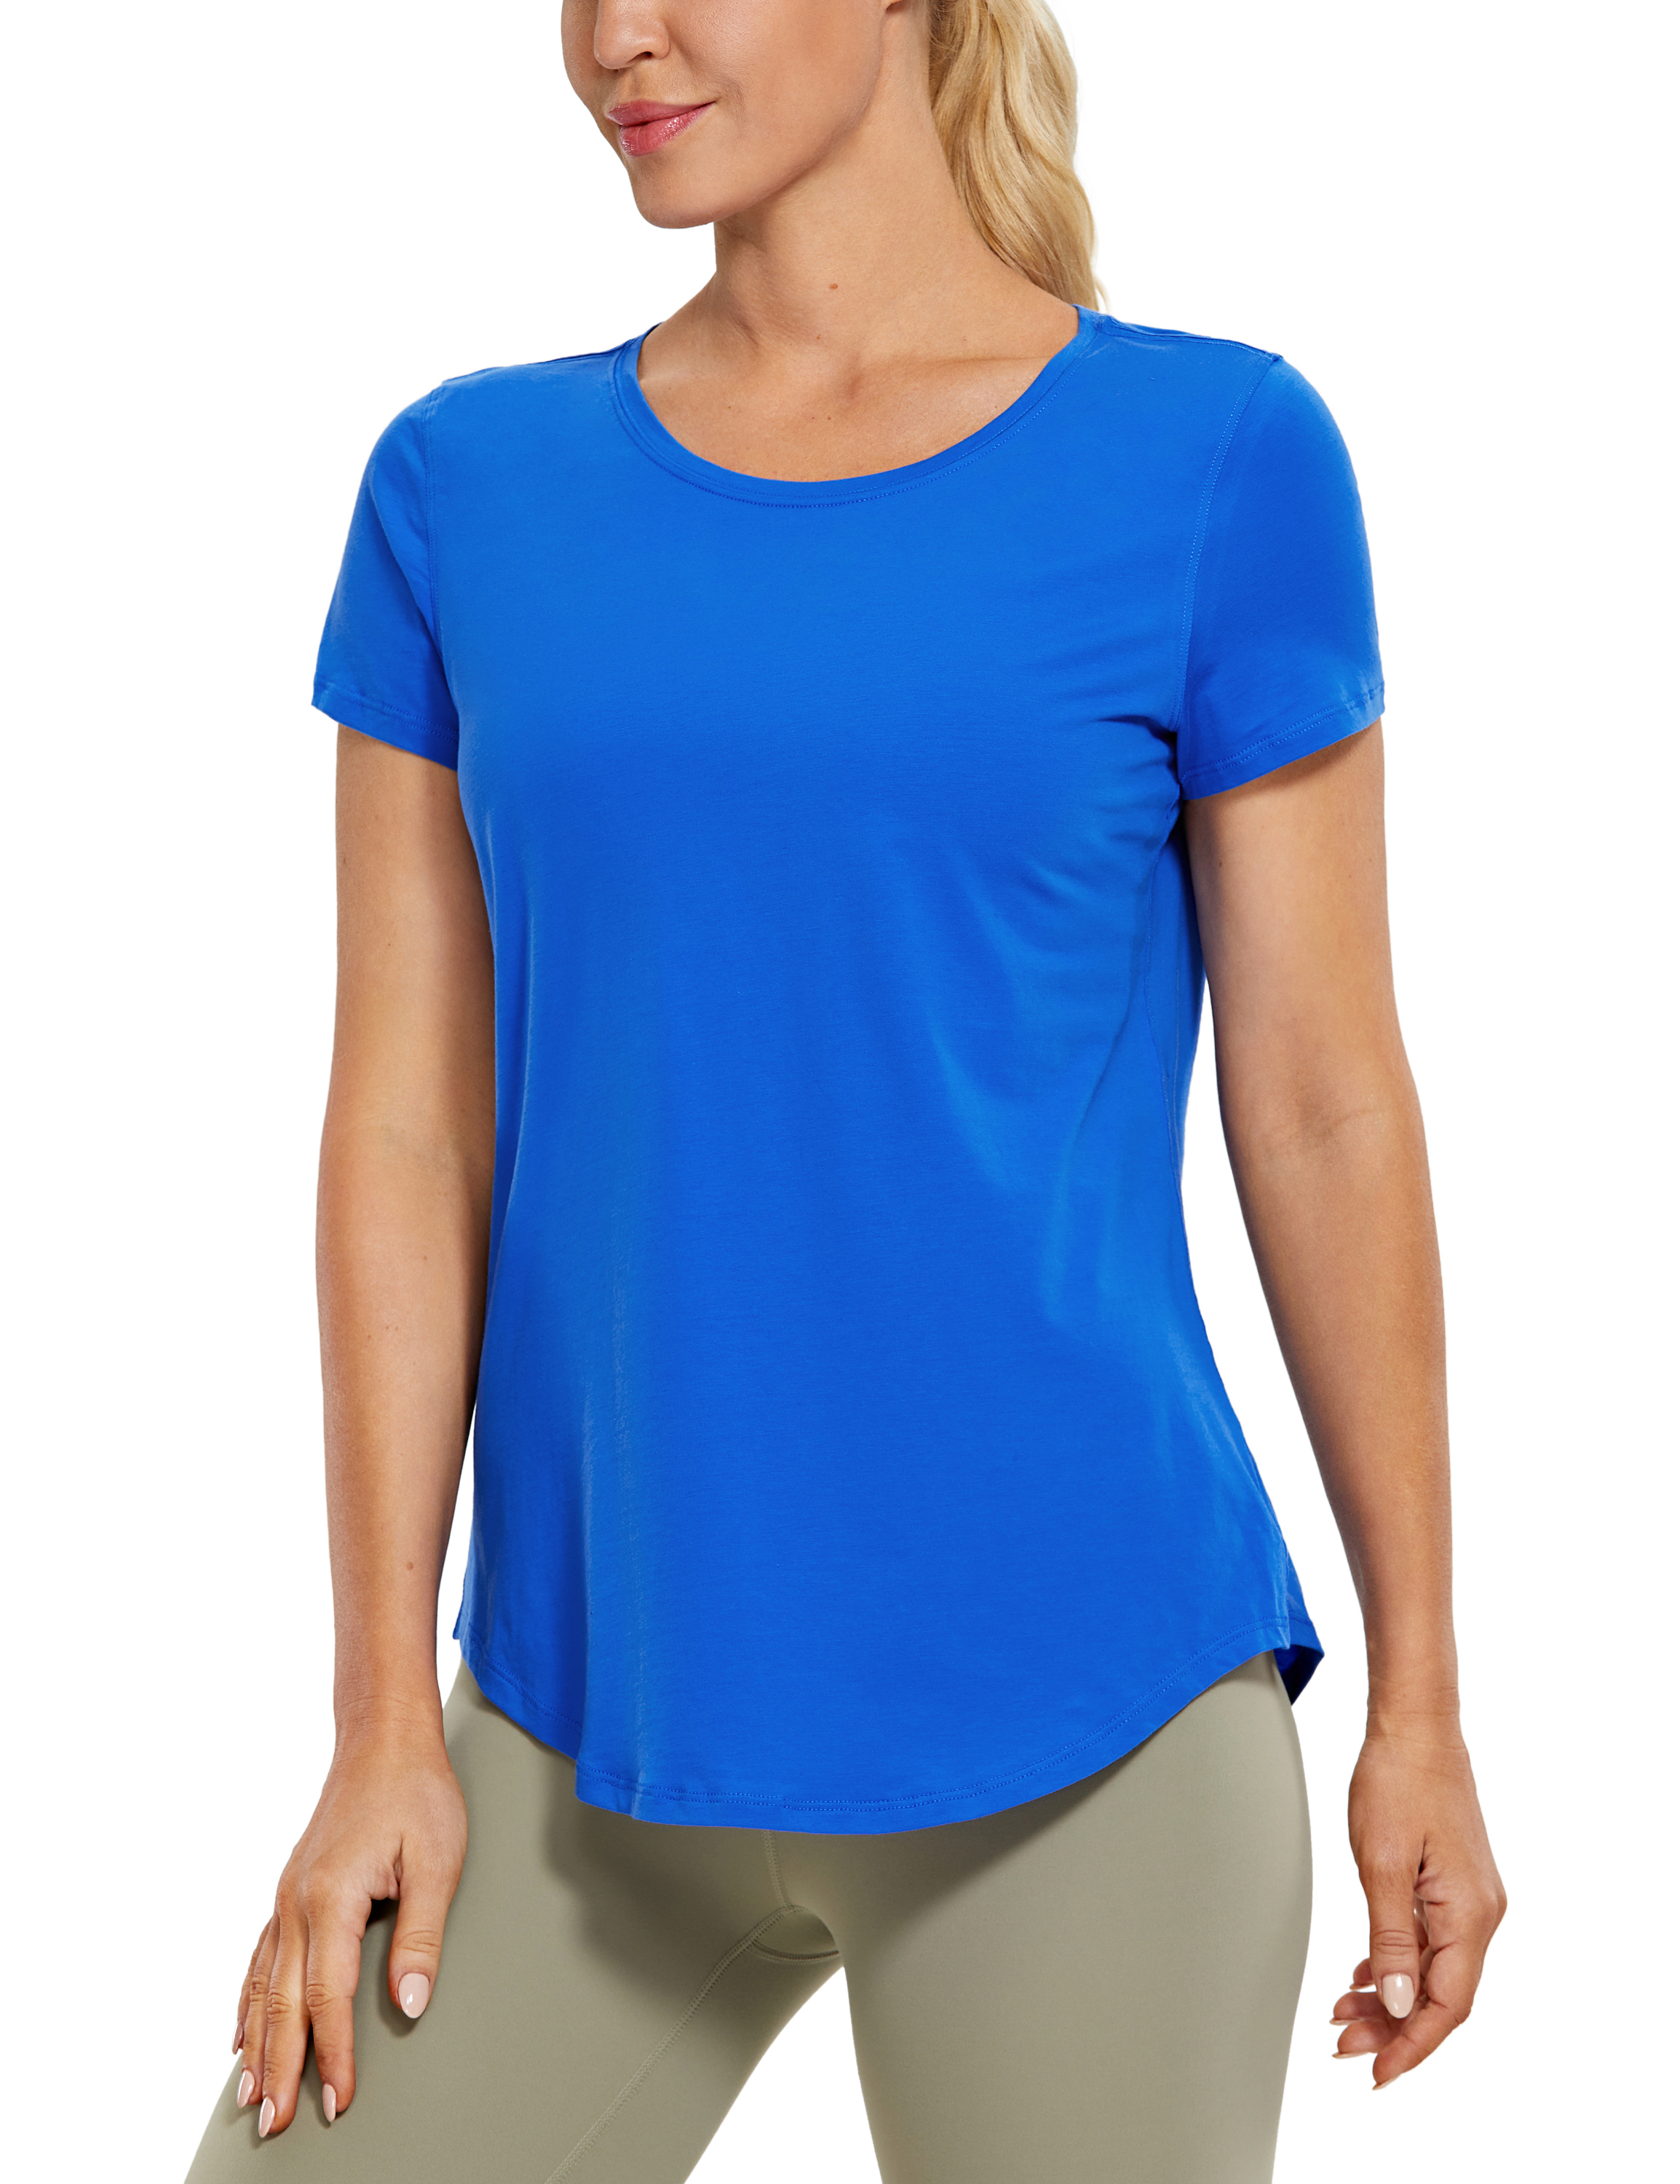 CRZ YOGA Women's Pima Cotton Short Sleeve Workout Shirt Yoga T-Shirt Tee Top